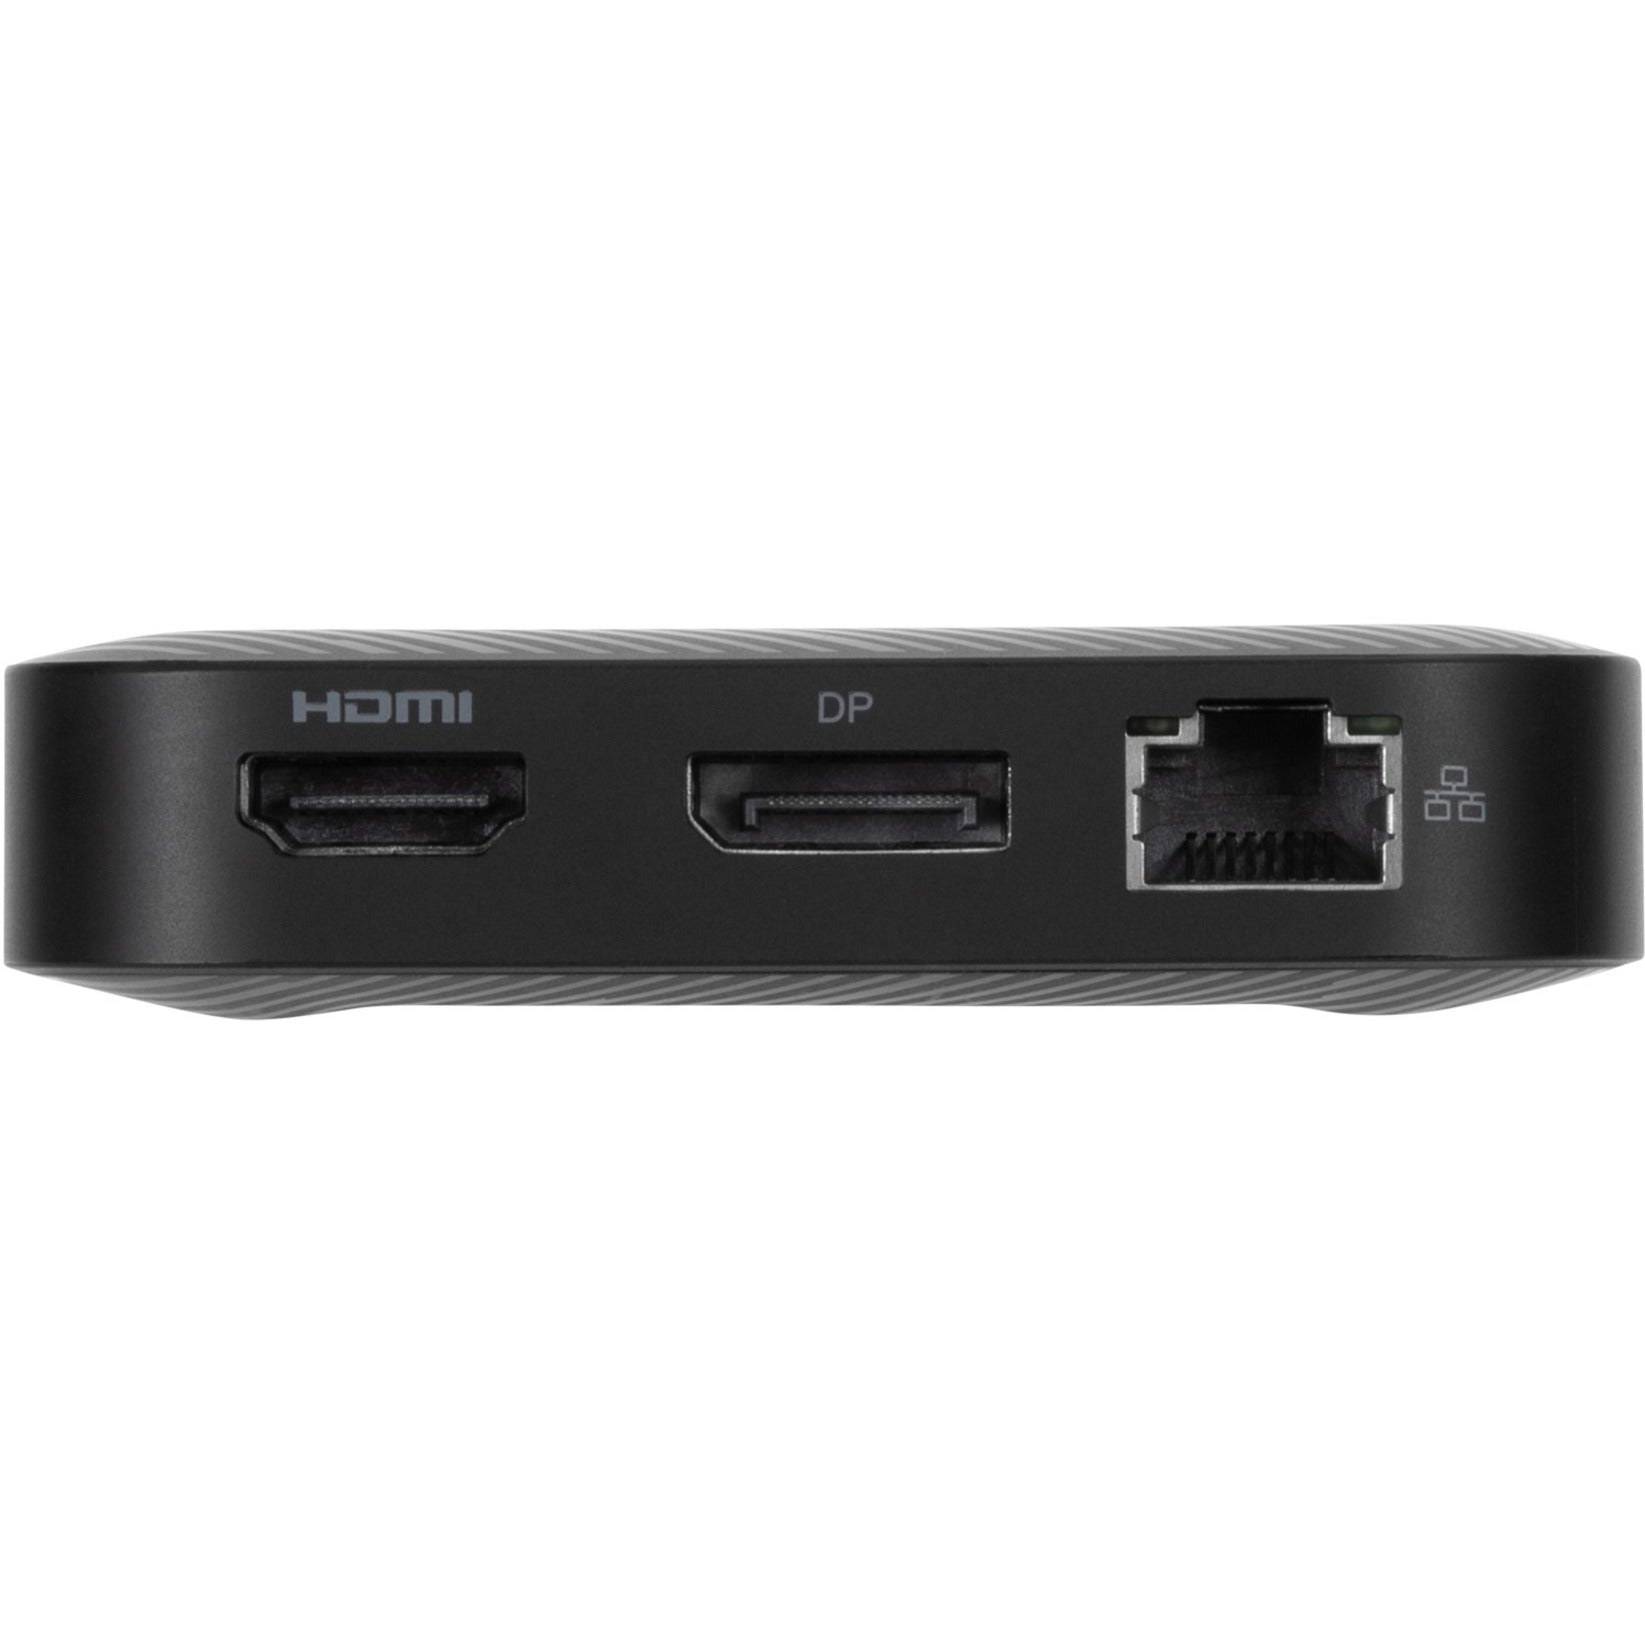 Targus DOCK425GLZ USB4 Dual Video 4K Docking Station with 85W PD Pass-Thru, HDMI, USB Type-A/C, DisplayPort, Gigabit Ethernet